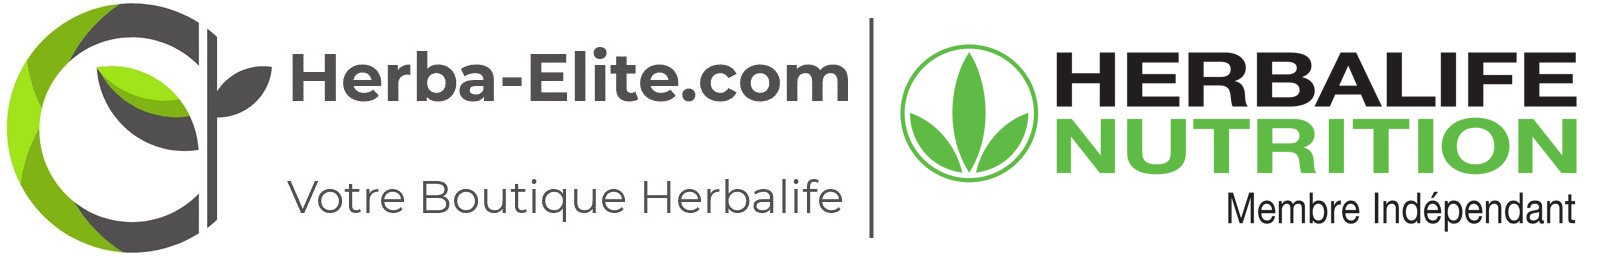 Herba-Elite.com